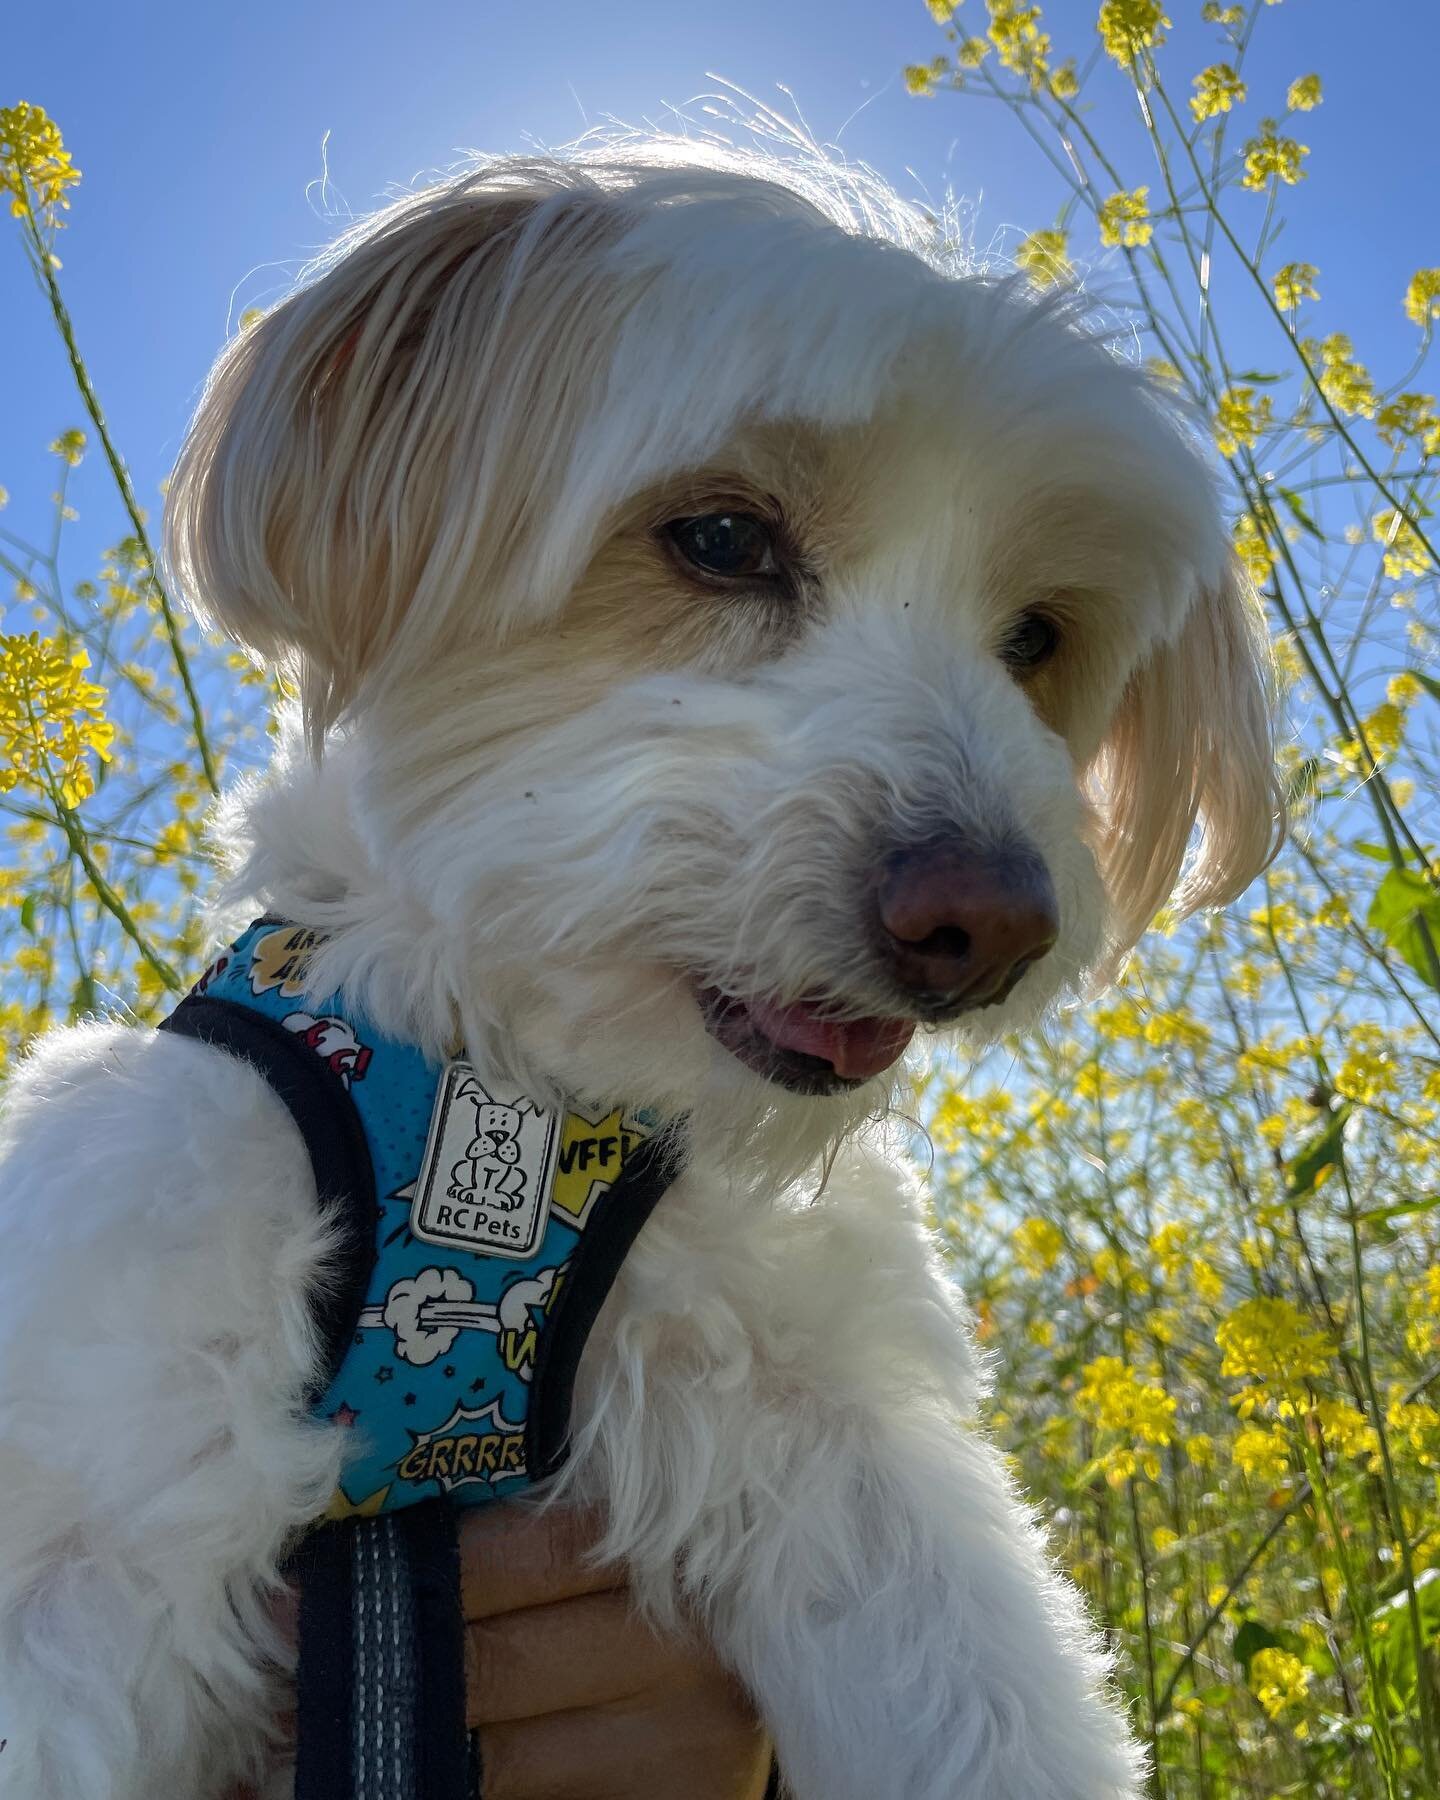 Selfie dump. #mojotherescue

#superbloom #dogselfies #dogsofinstagram #dogstagram #funnydogs #wildflowers #socalsuperbloom #adoptdontshop #rescuedogsofinstagram #funnydogs #funnydogsofinstagram #poodlemix #chihuahuamix